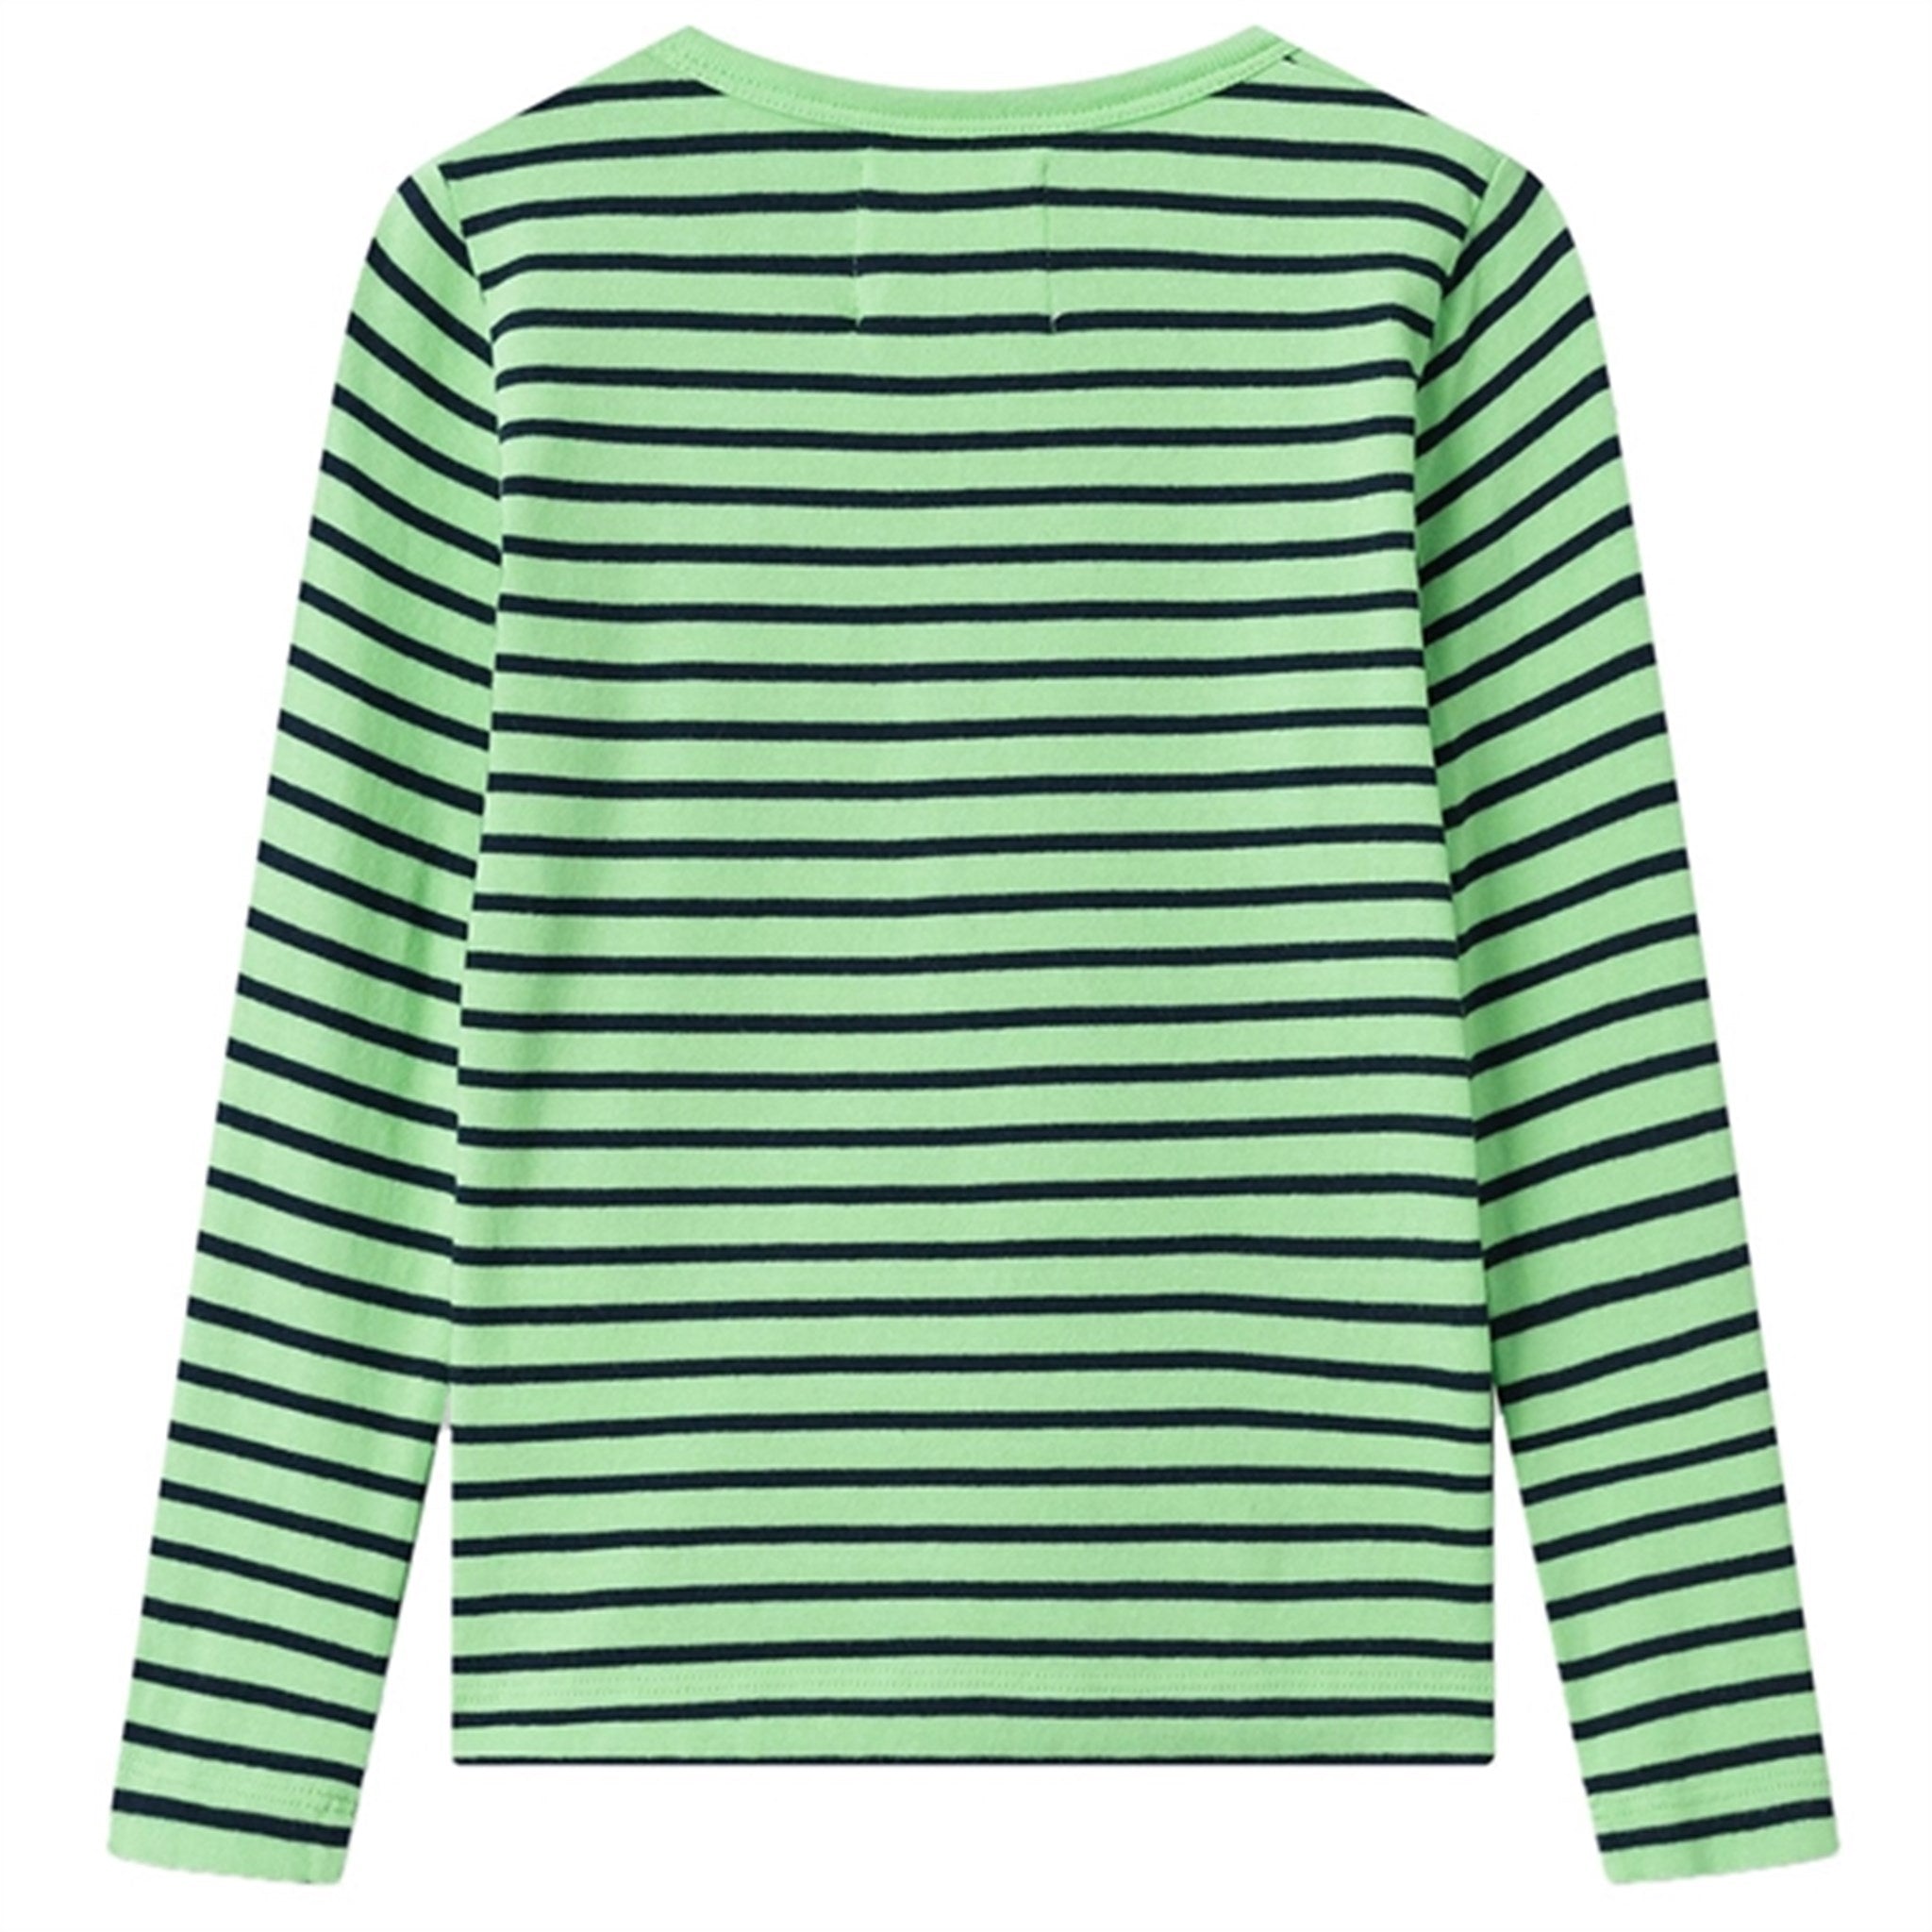 Wood Wood Pale Green/Navy Stripes Kim Shirt 5